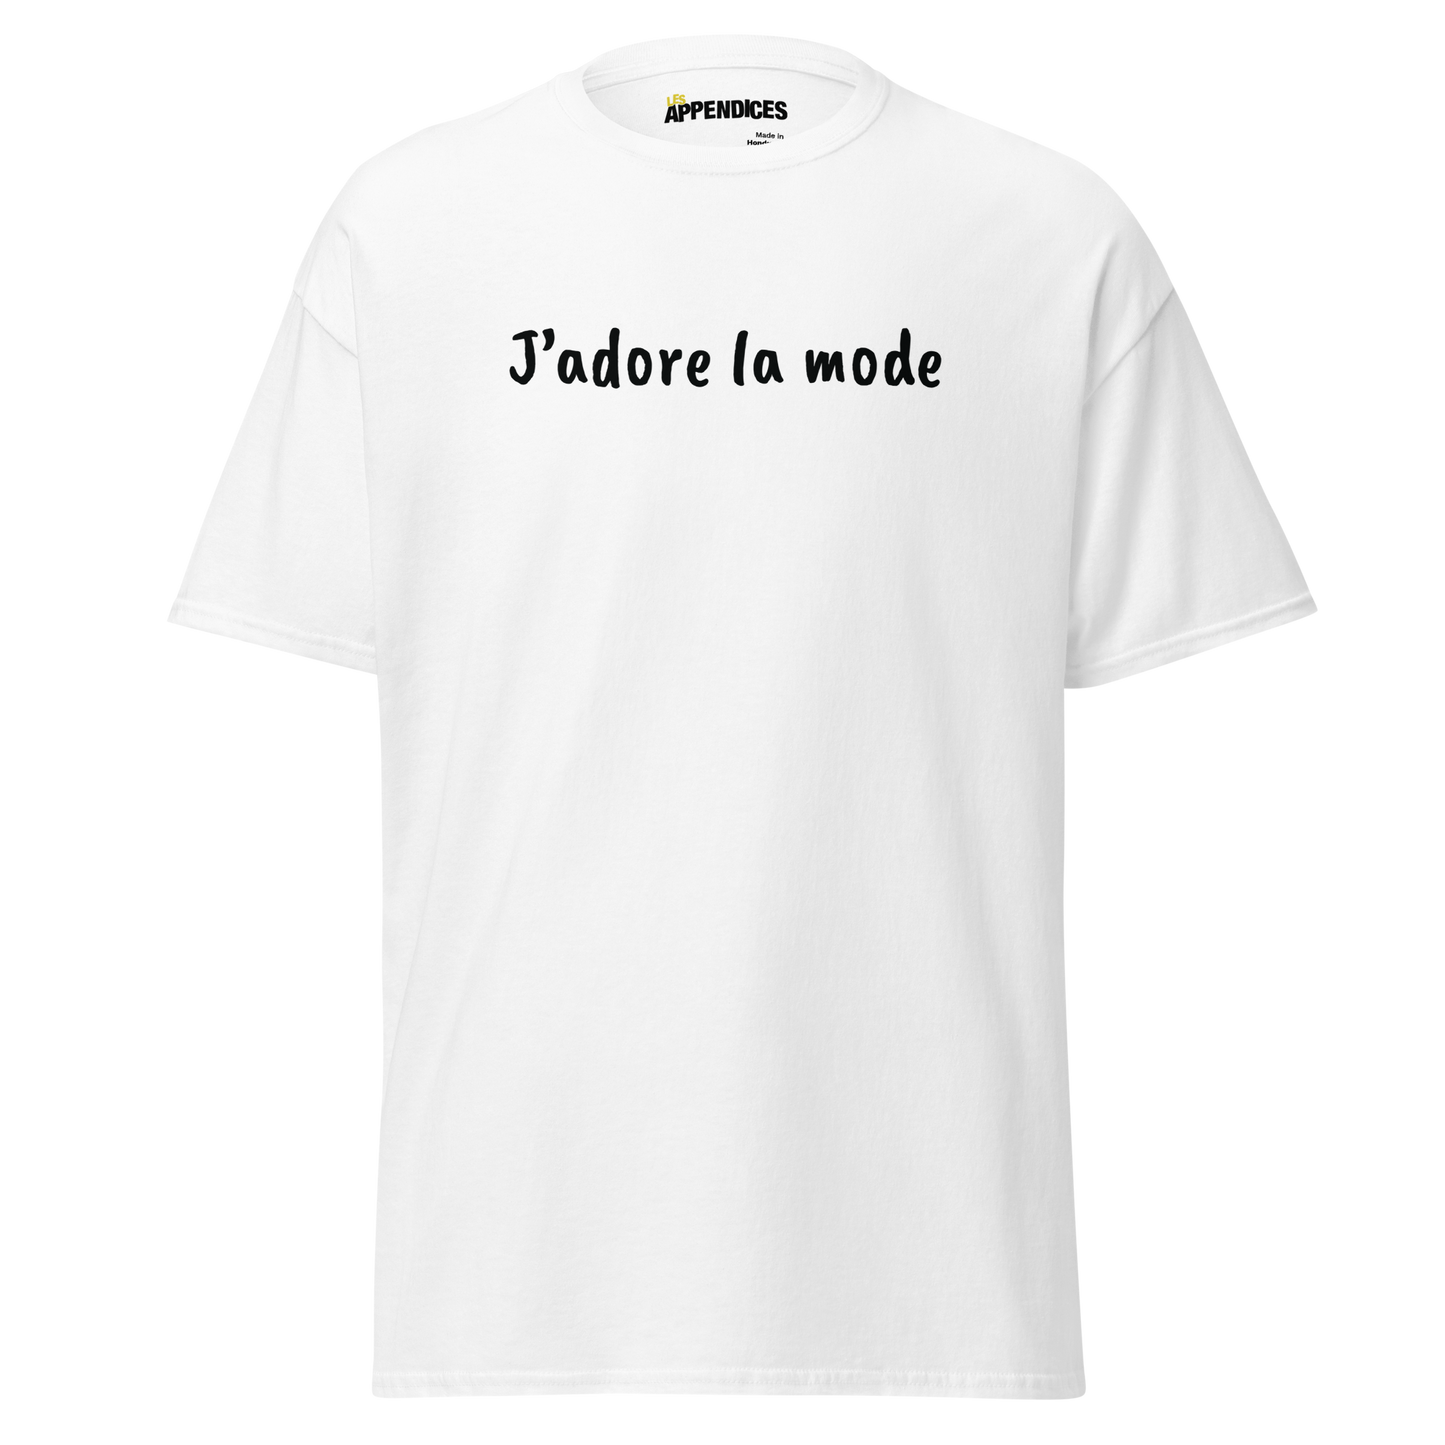 T-shirt unisexe - J'adore la mode